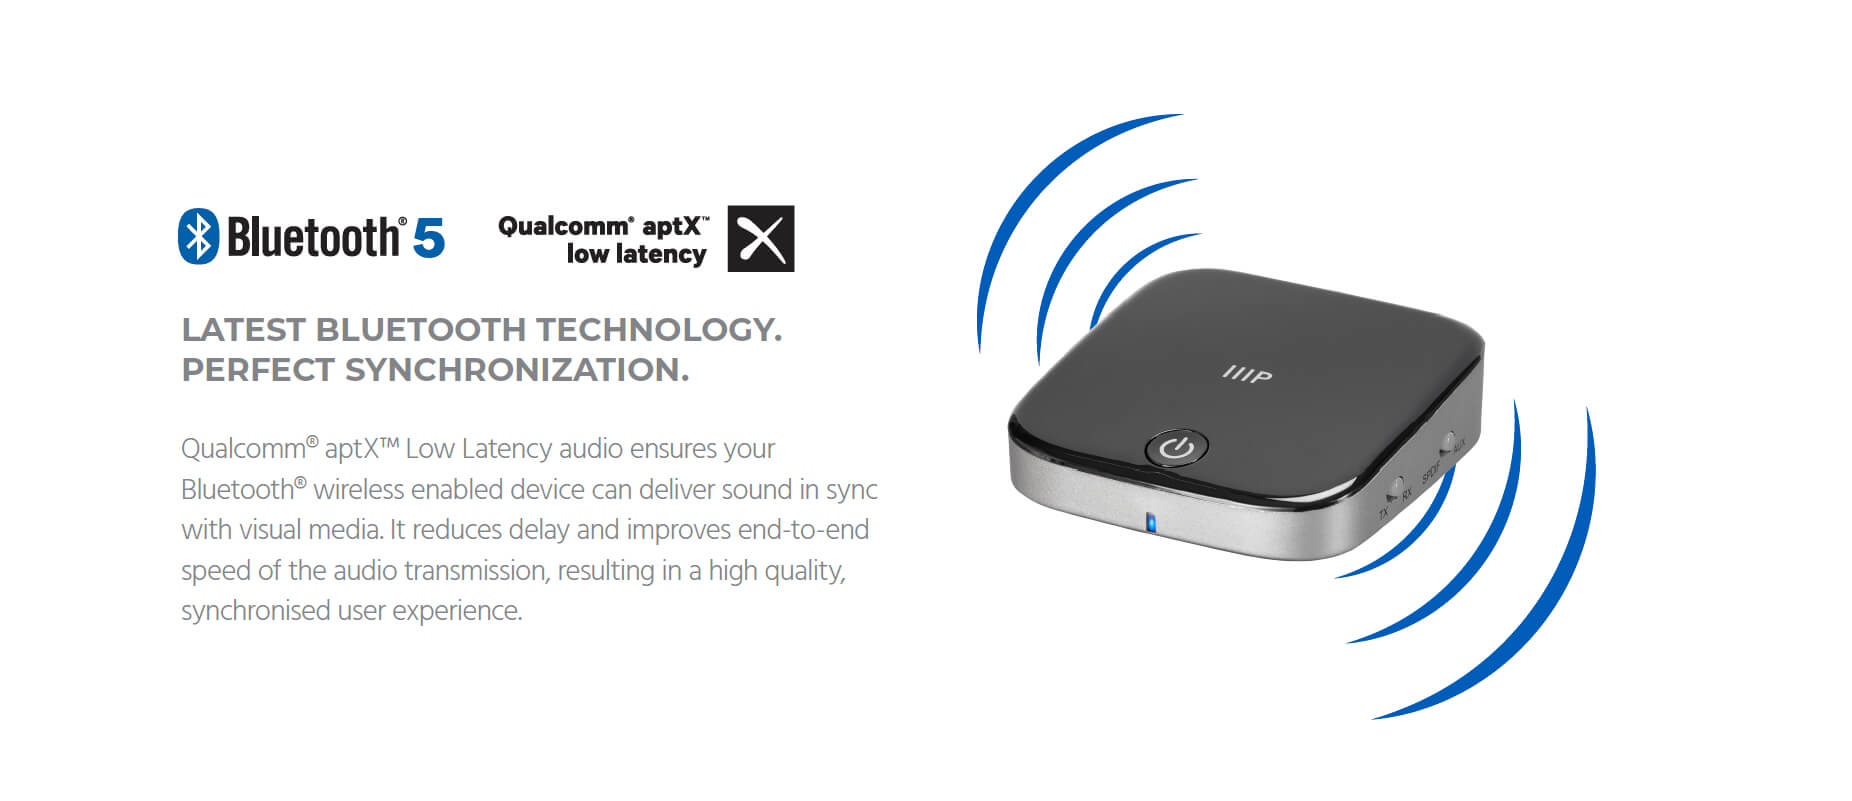 Monoprice Bluetooth 5 Transmitter and Receiver with Qualcomm aptX Audio  Qualcomm aptX Low Latency Audio AAC and SBC Codecs